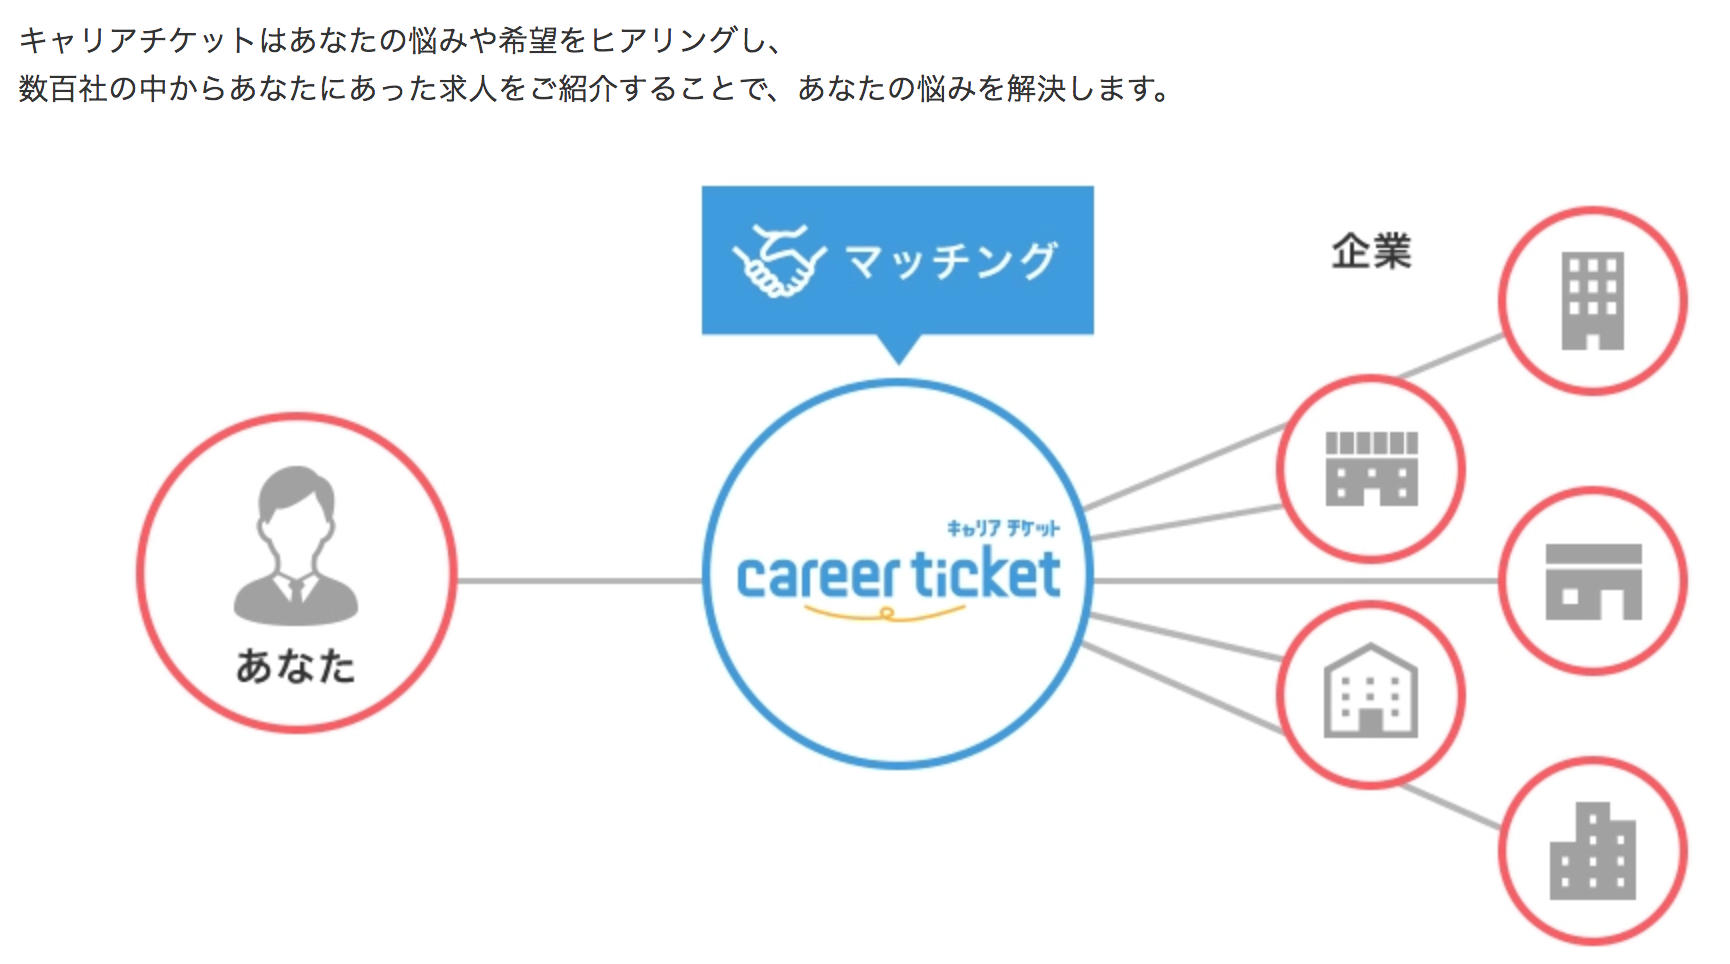 LA`Pbg(career ticket)̋lЉ͏AEG[WFg